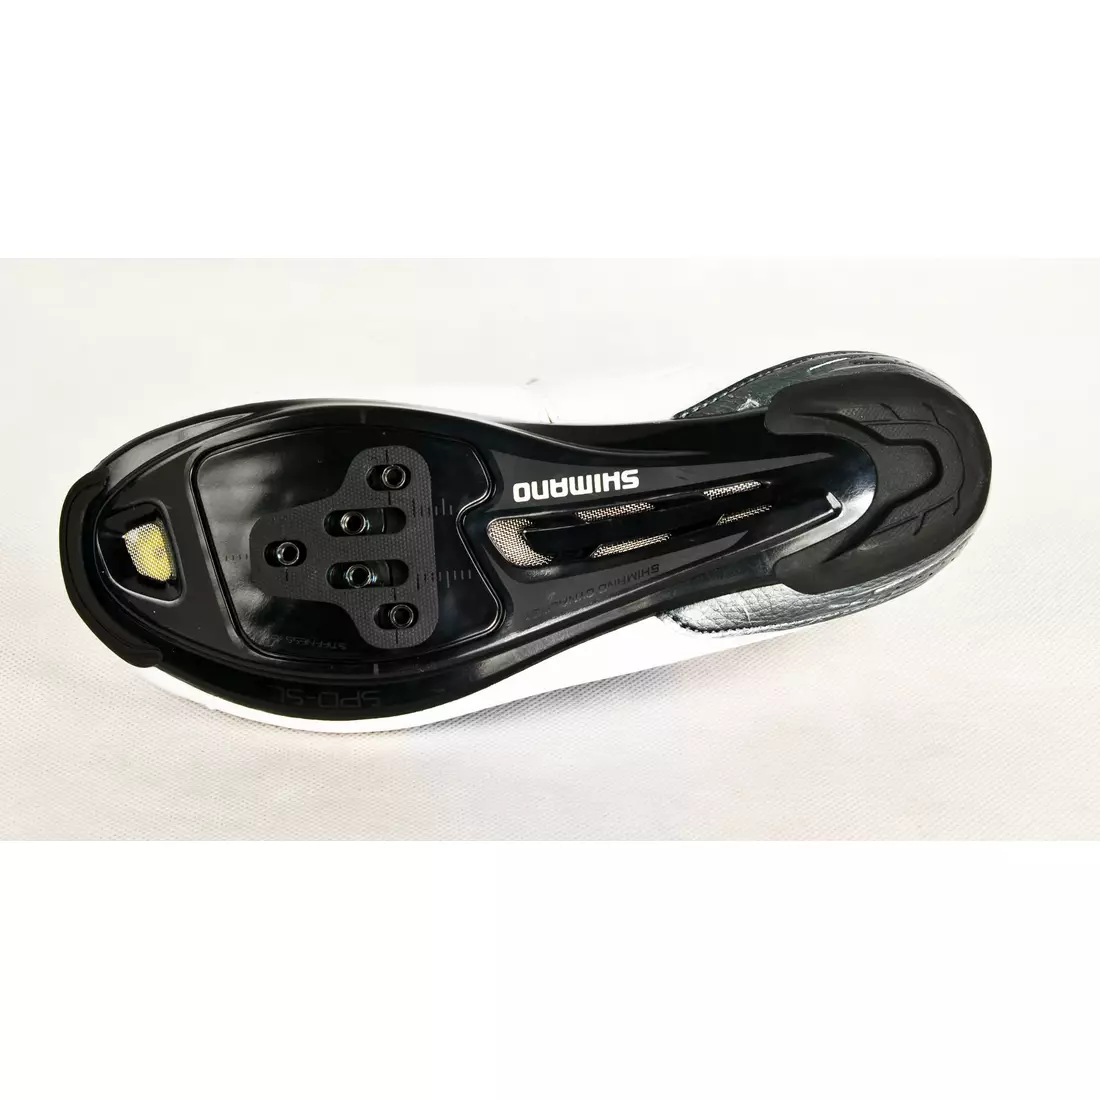 SHIMANO SH-RP200WW - pantofi de ciclism rutier dama, culoare: Alb